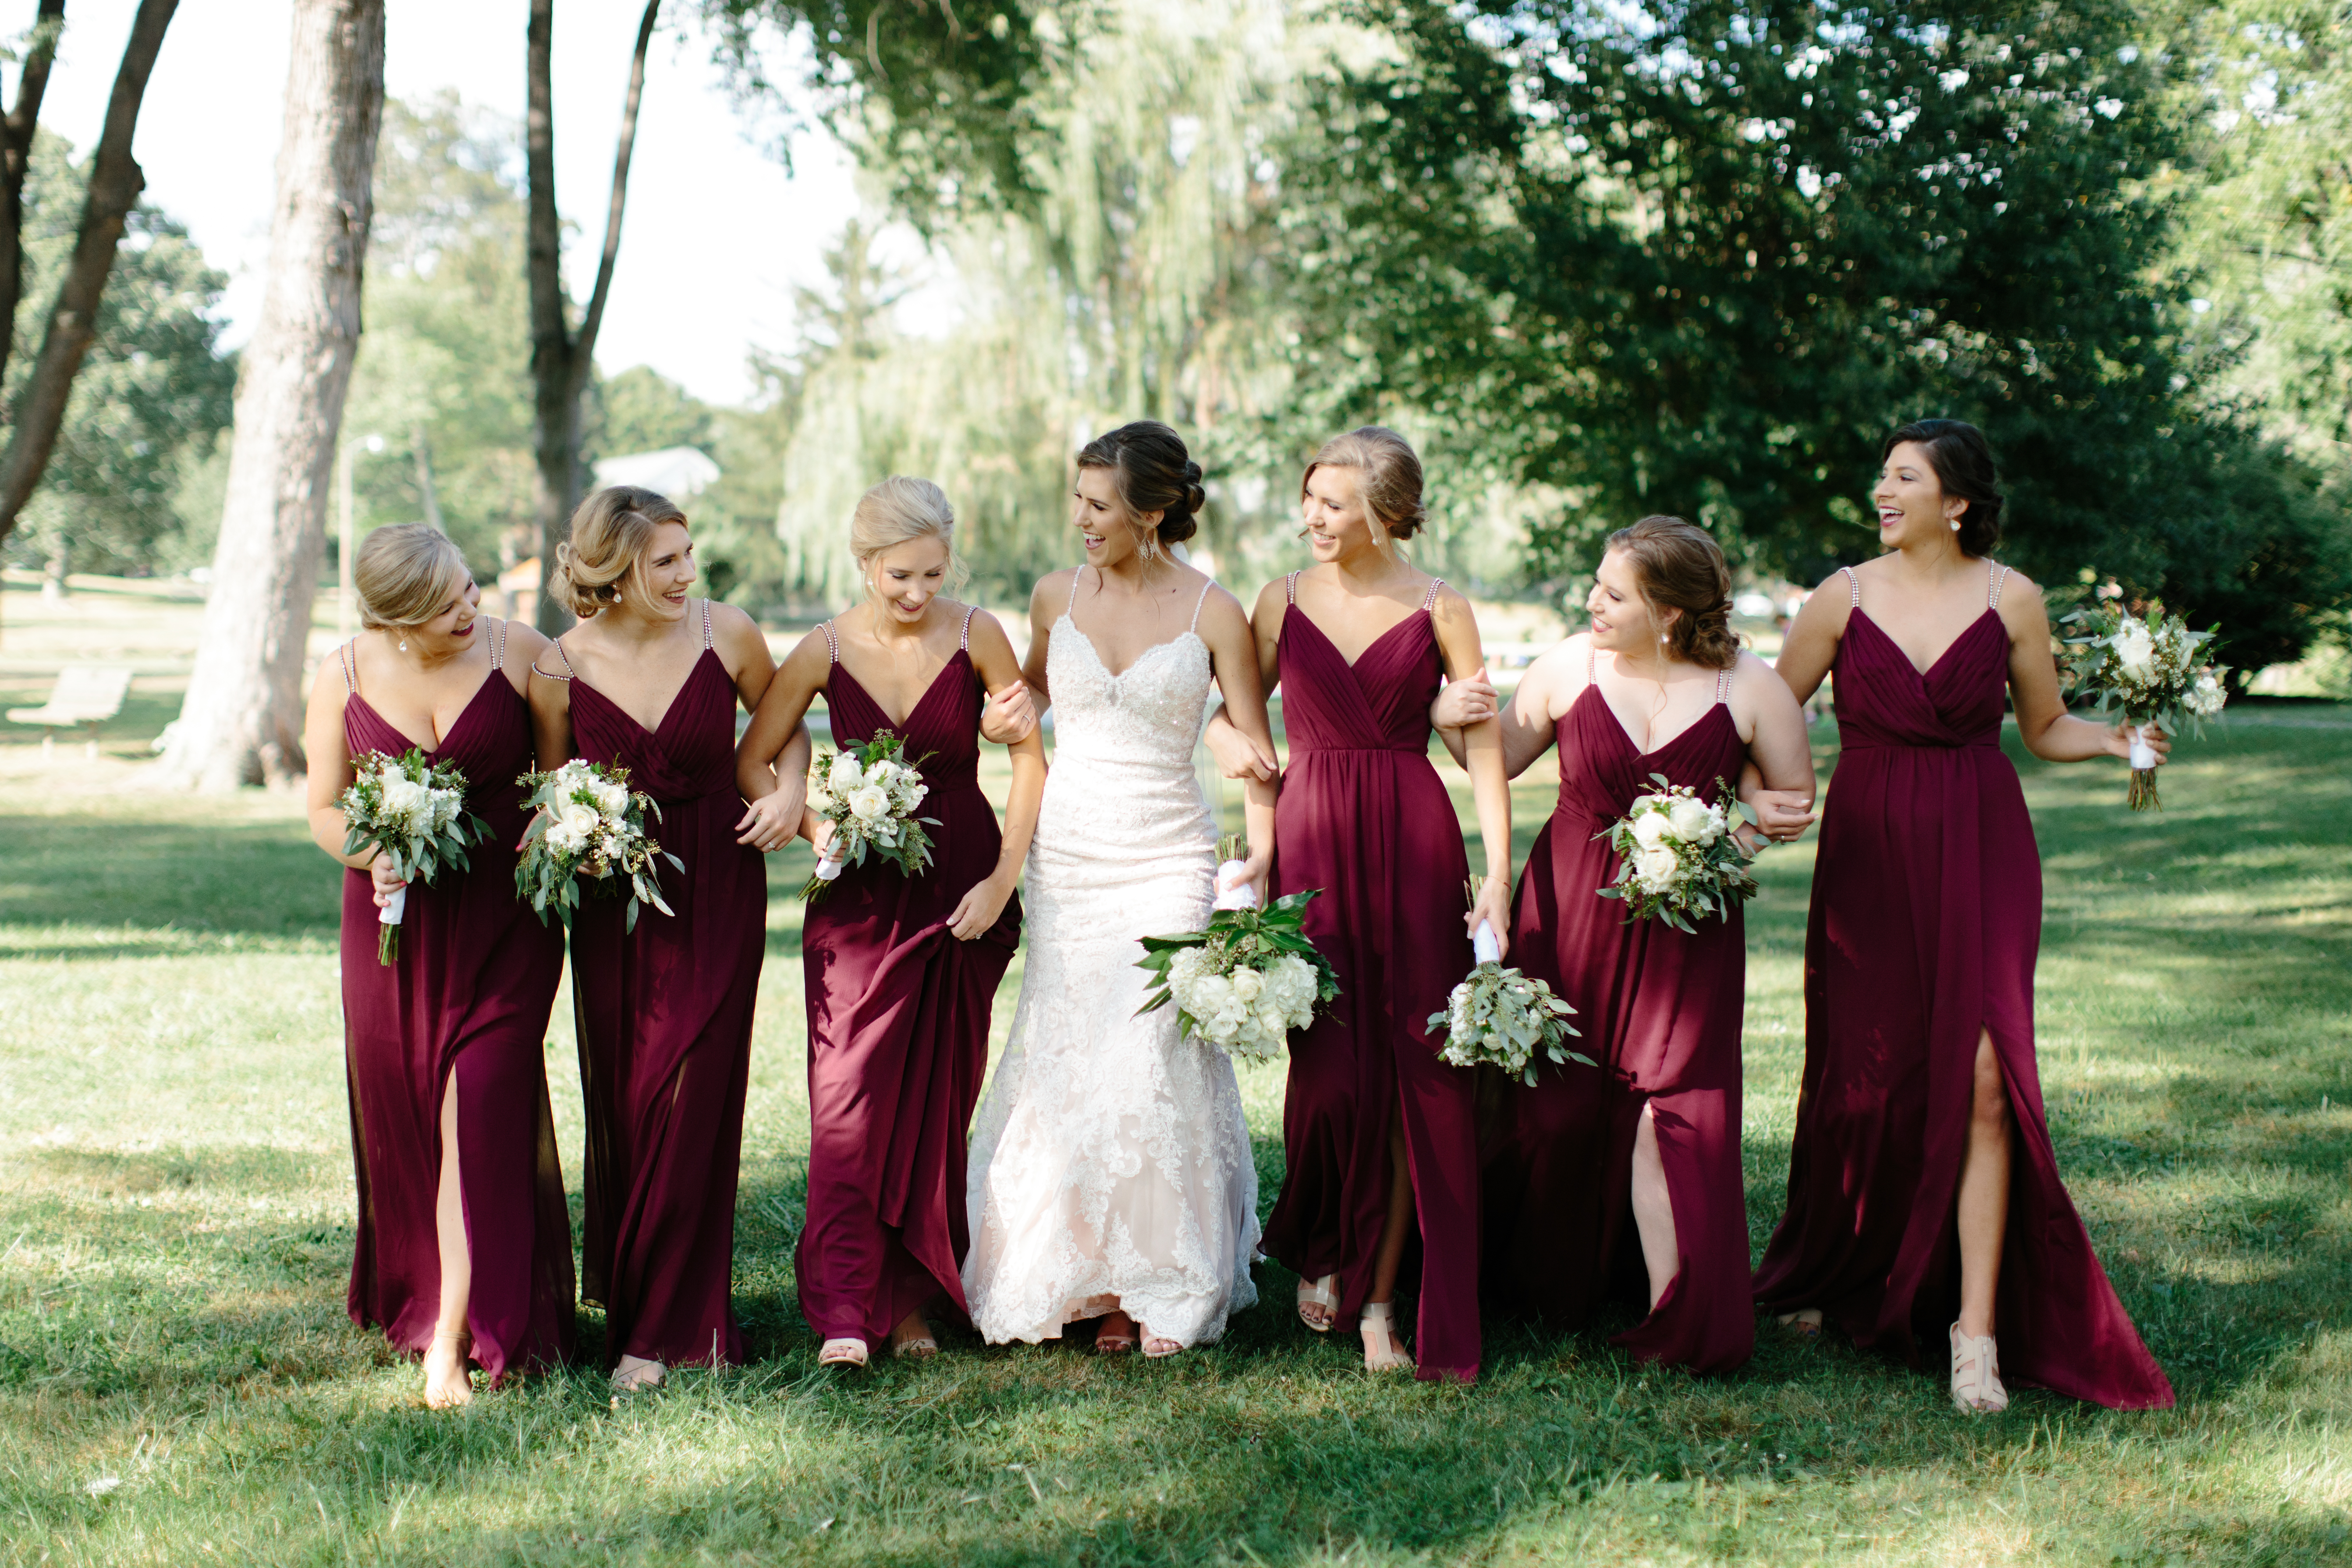 bridesmaids in maroon dress walk together